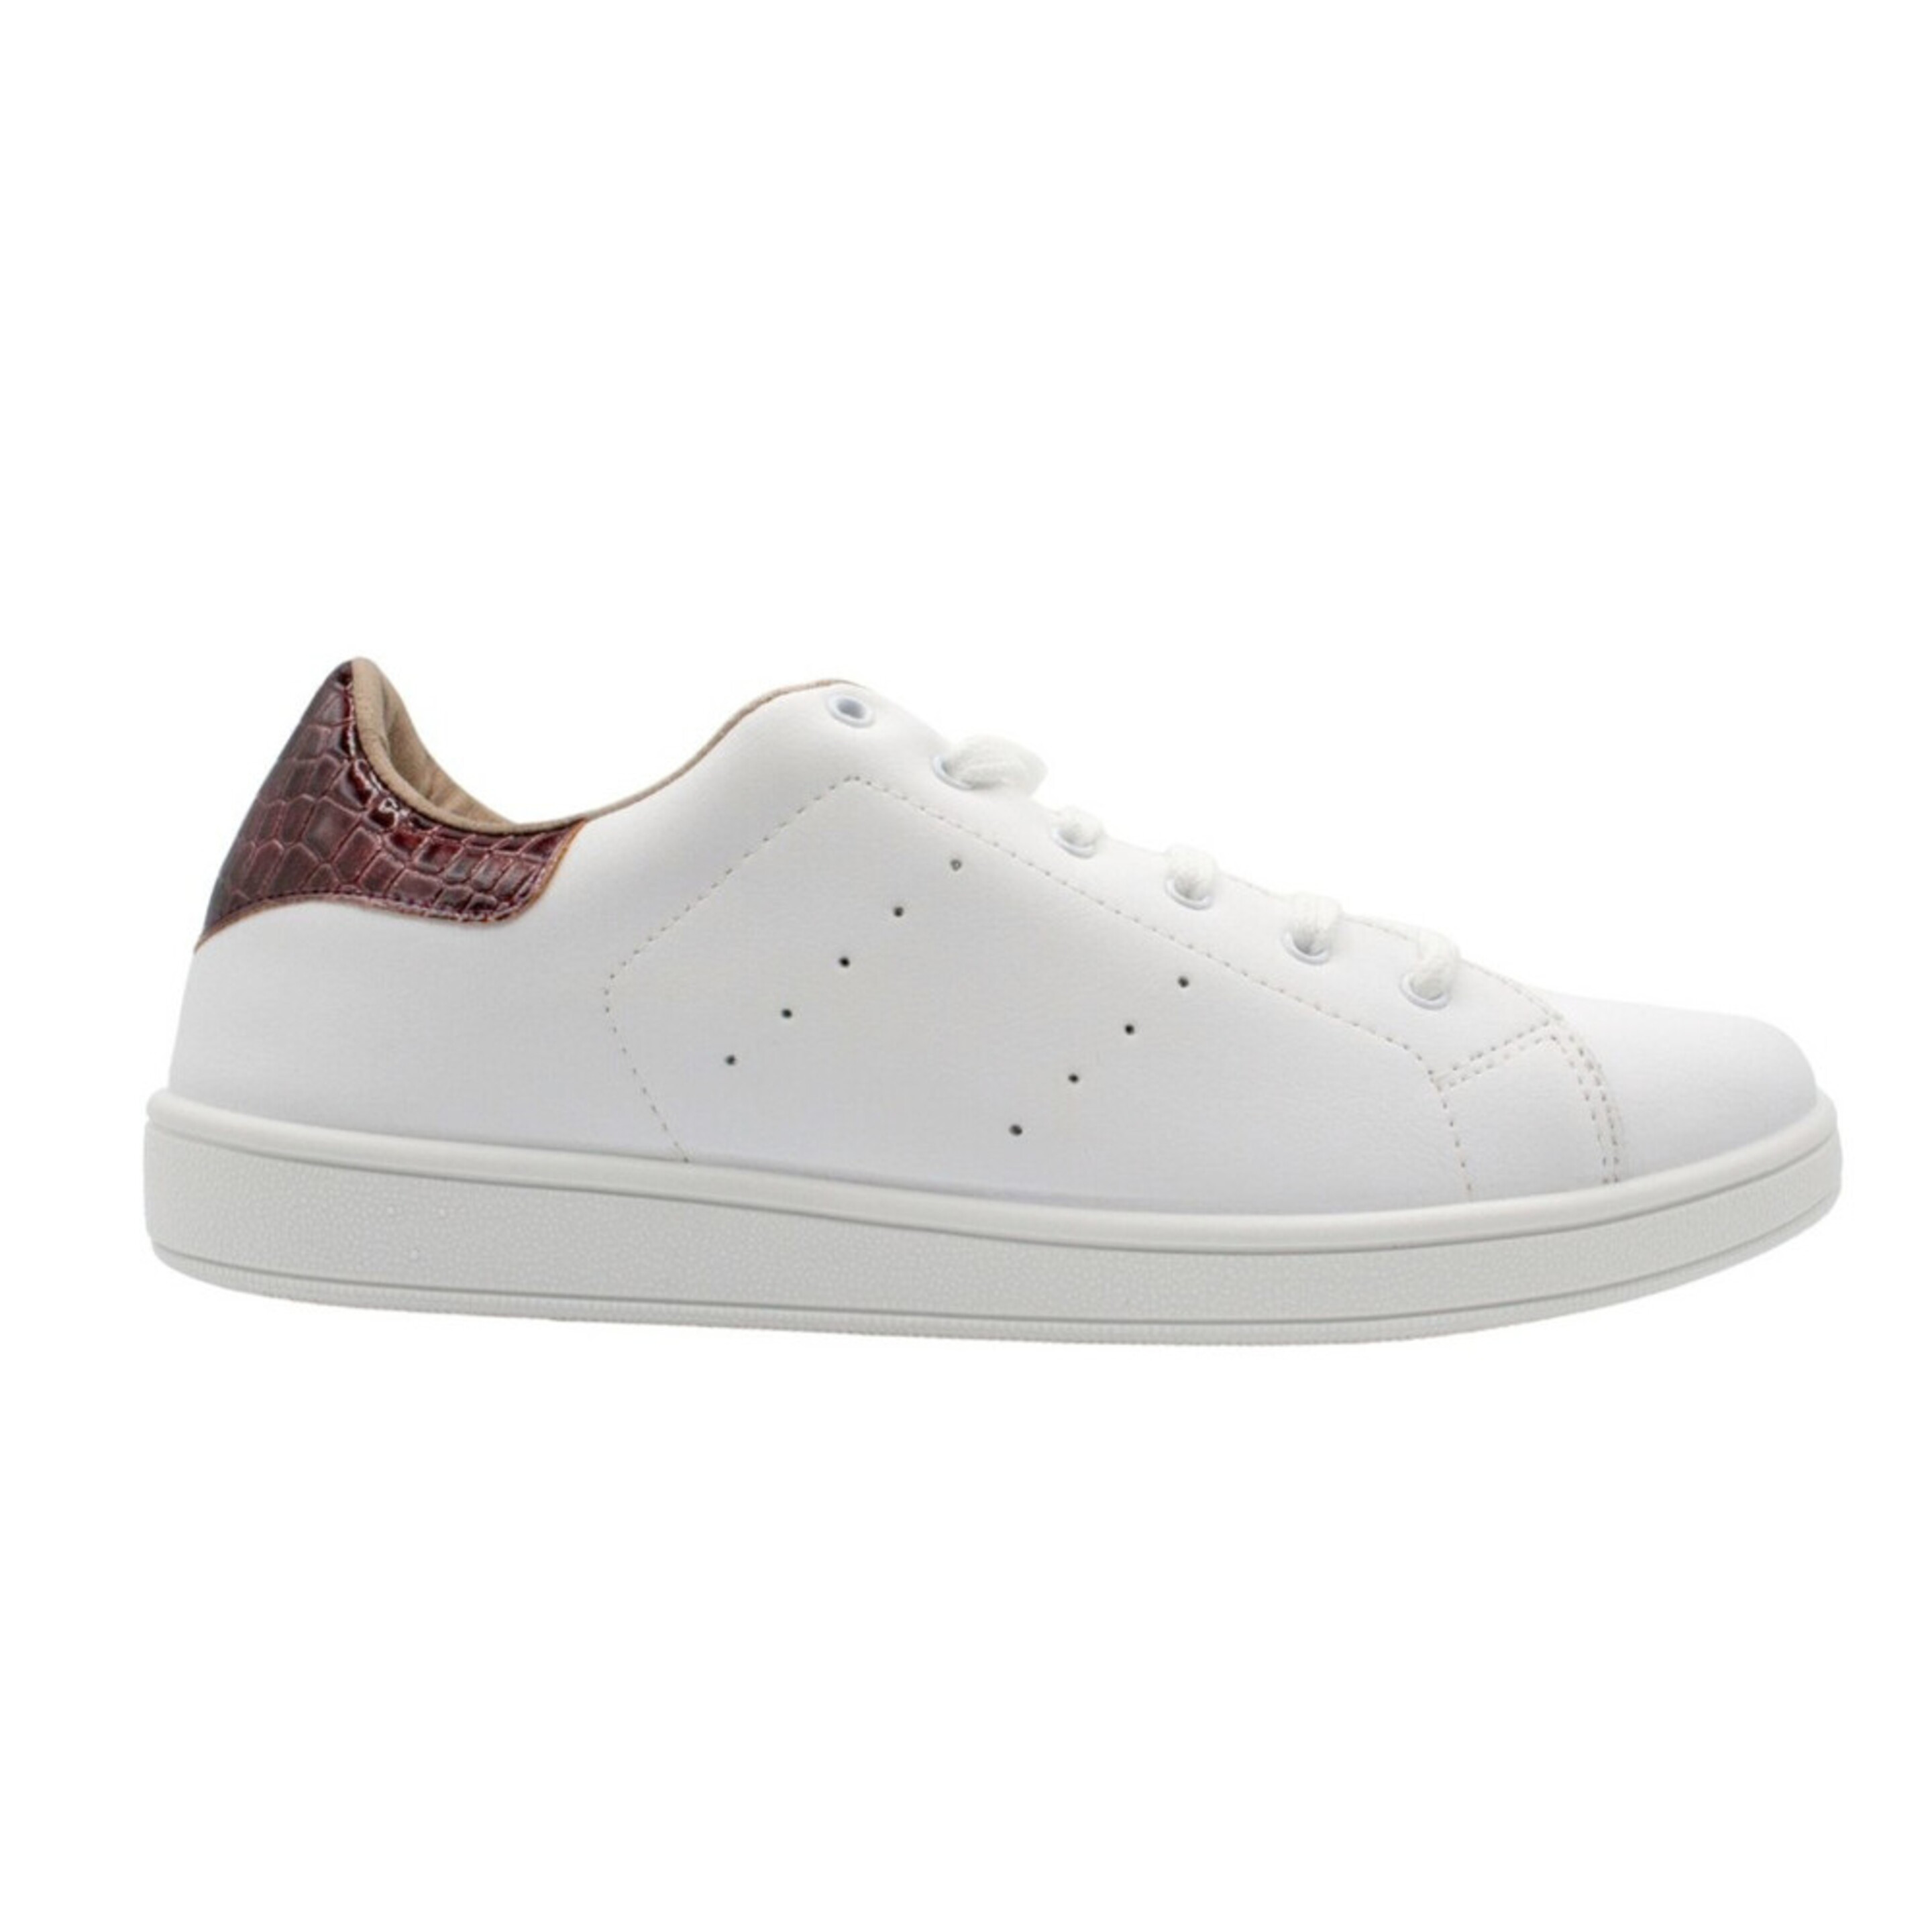 Sneaker Owlet Shoes Rebecca - blanco-rojo - 